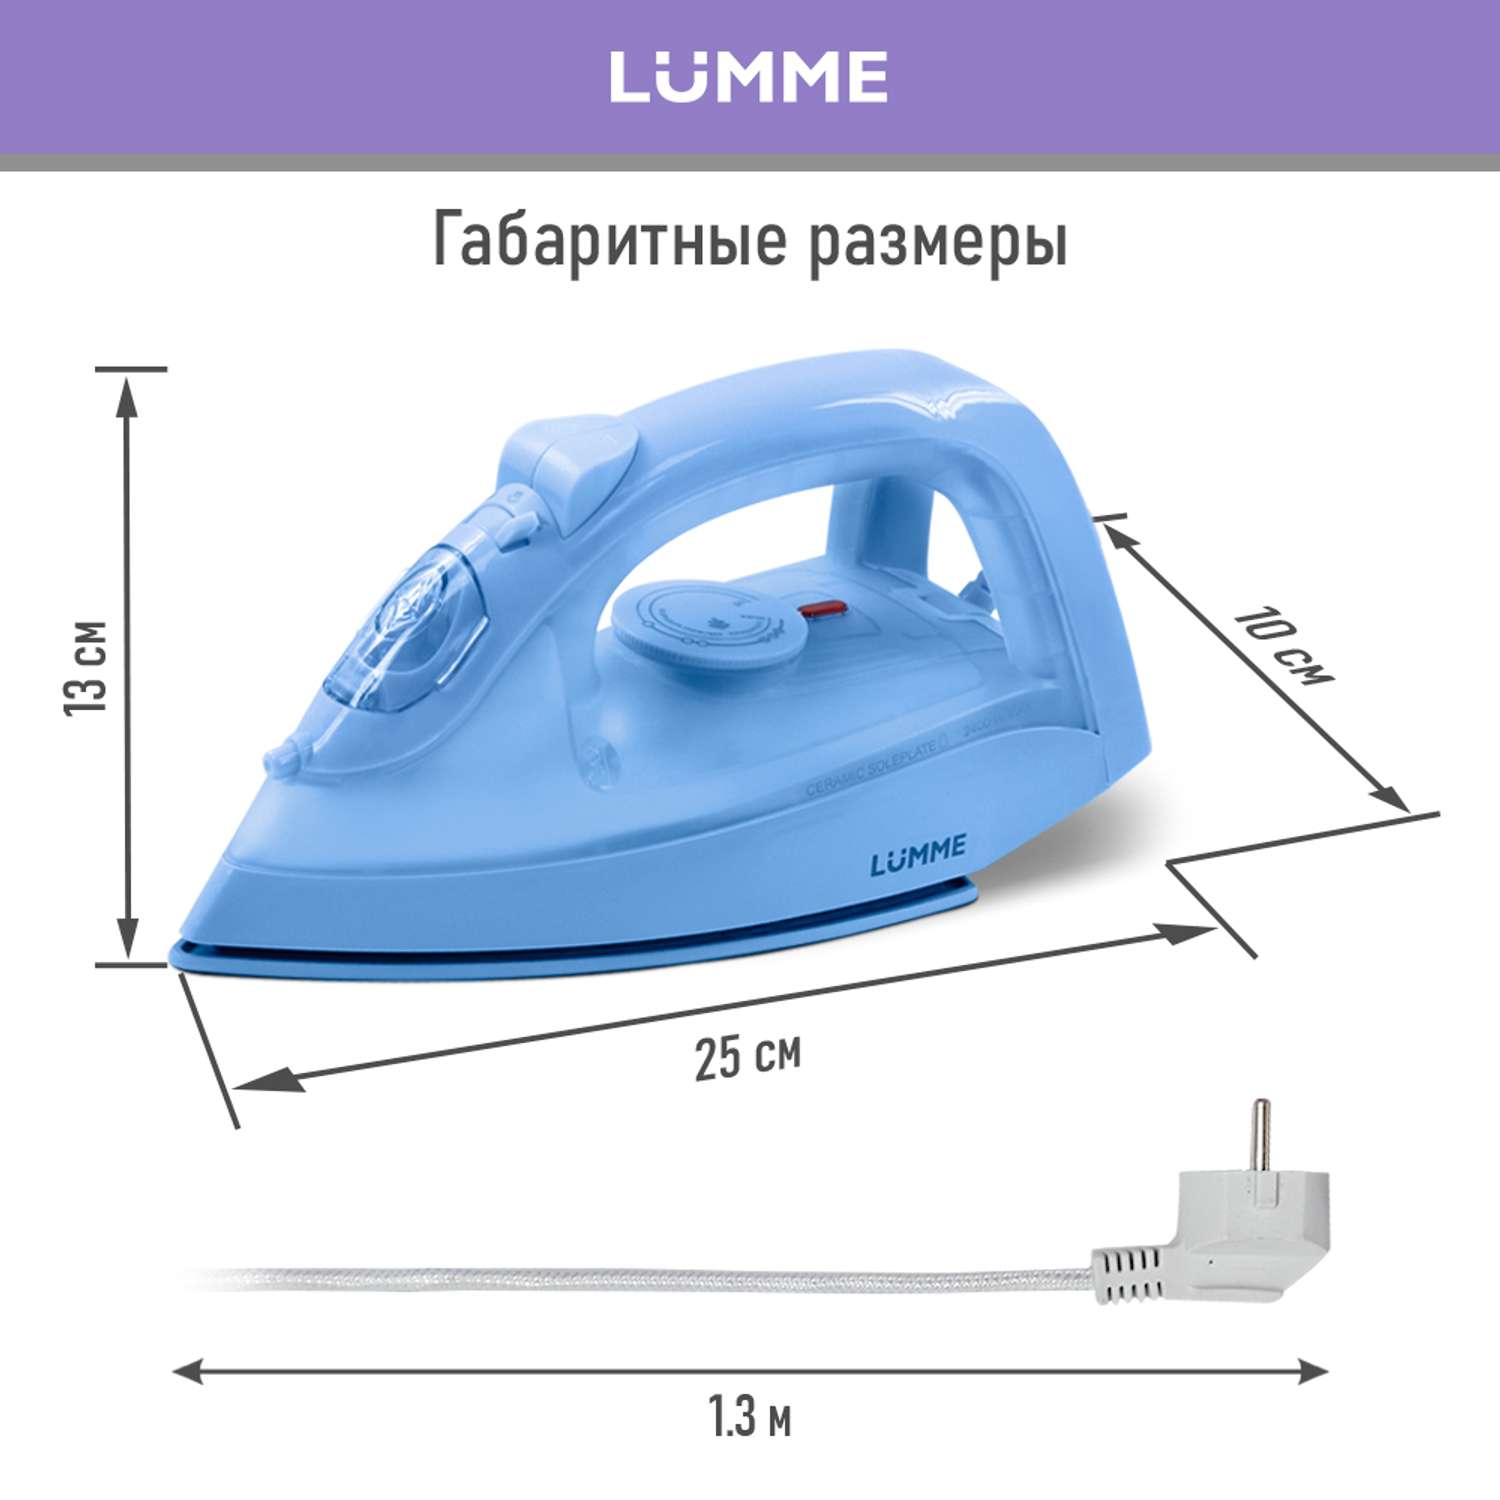 Утюг LUMME LU-1136 светлый аквамарин - фото 8